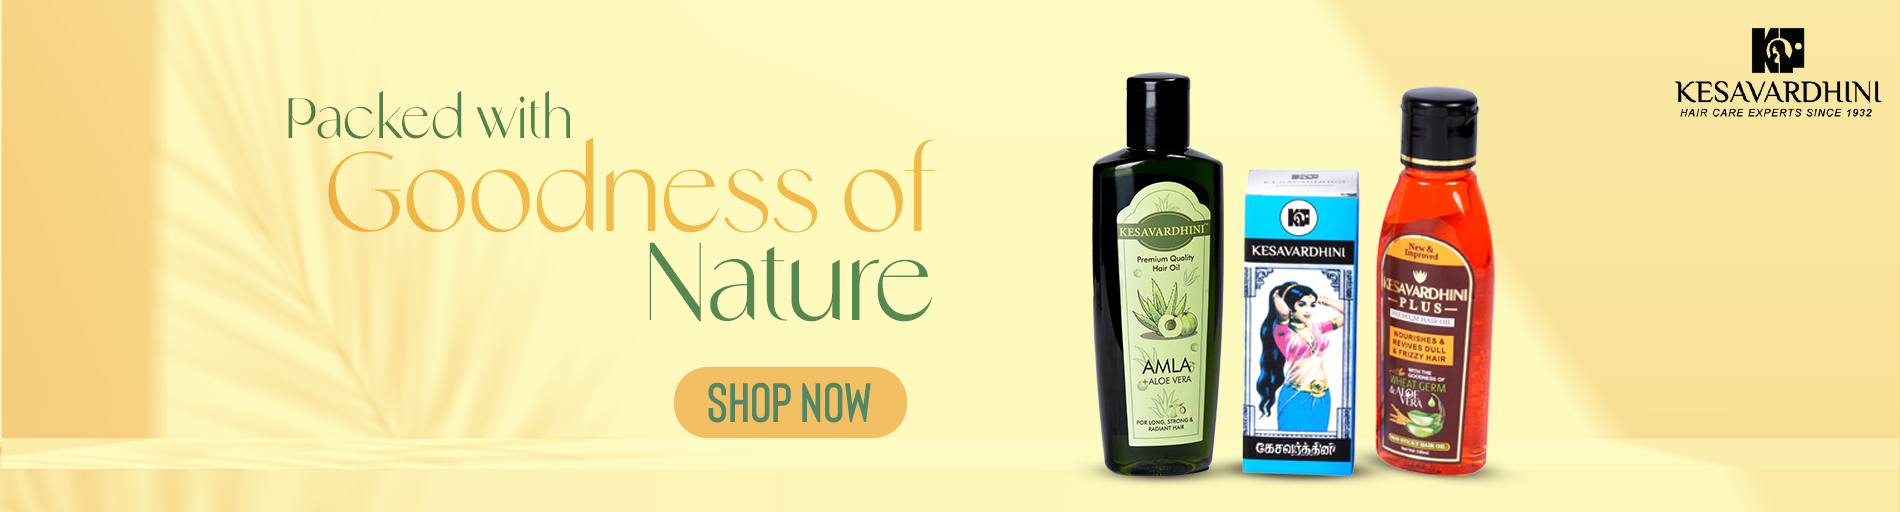 Kesavardhini - Buy Best Natural Hair Oil for Fast Hair Growth